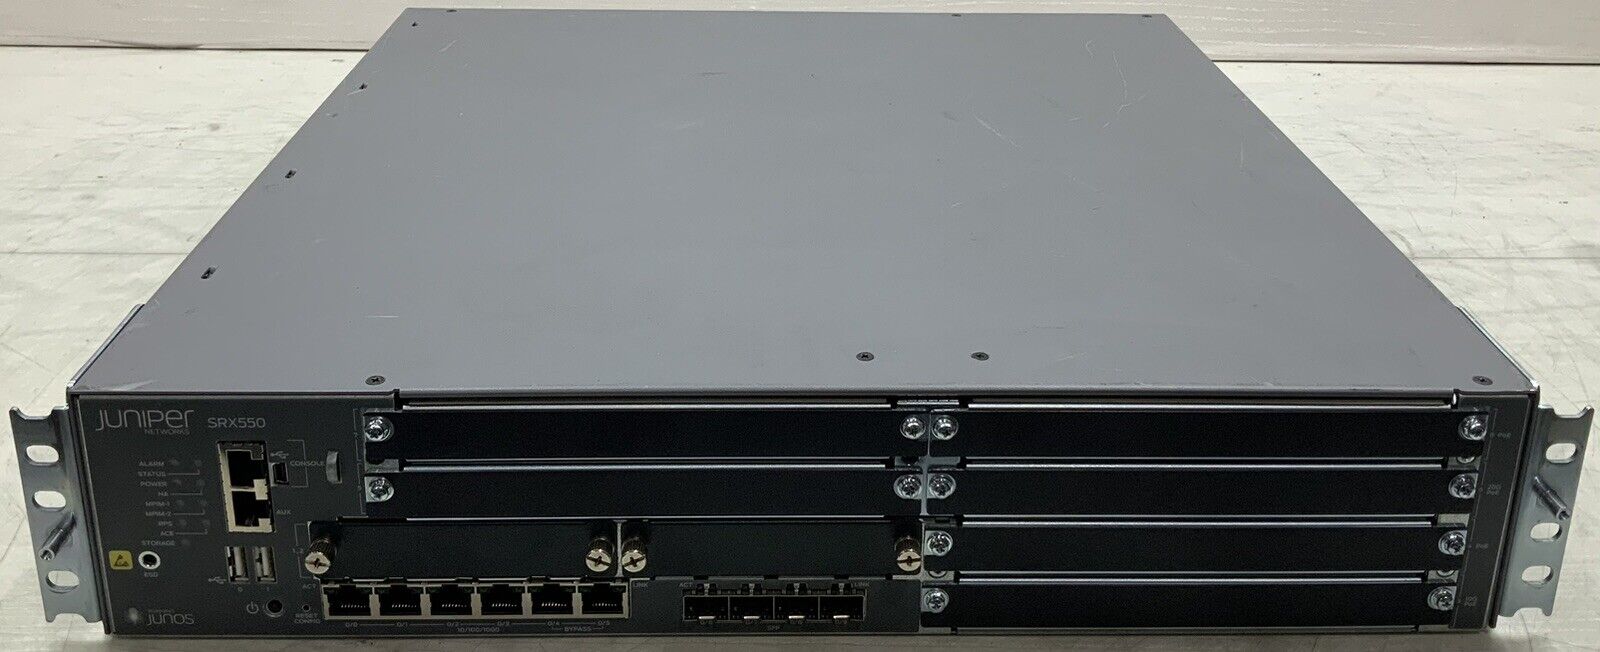 Juniper SRX550 Services Gateway Firewall SRX550-645AP